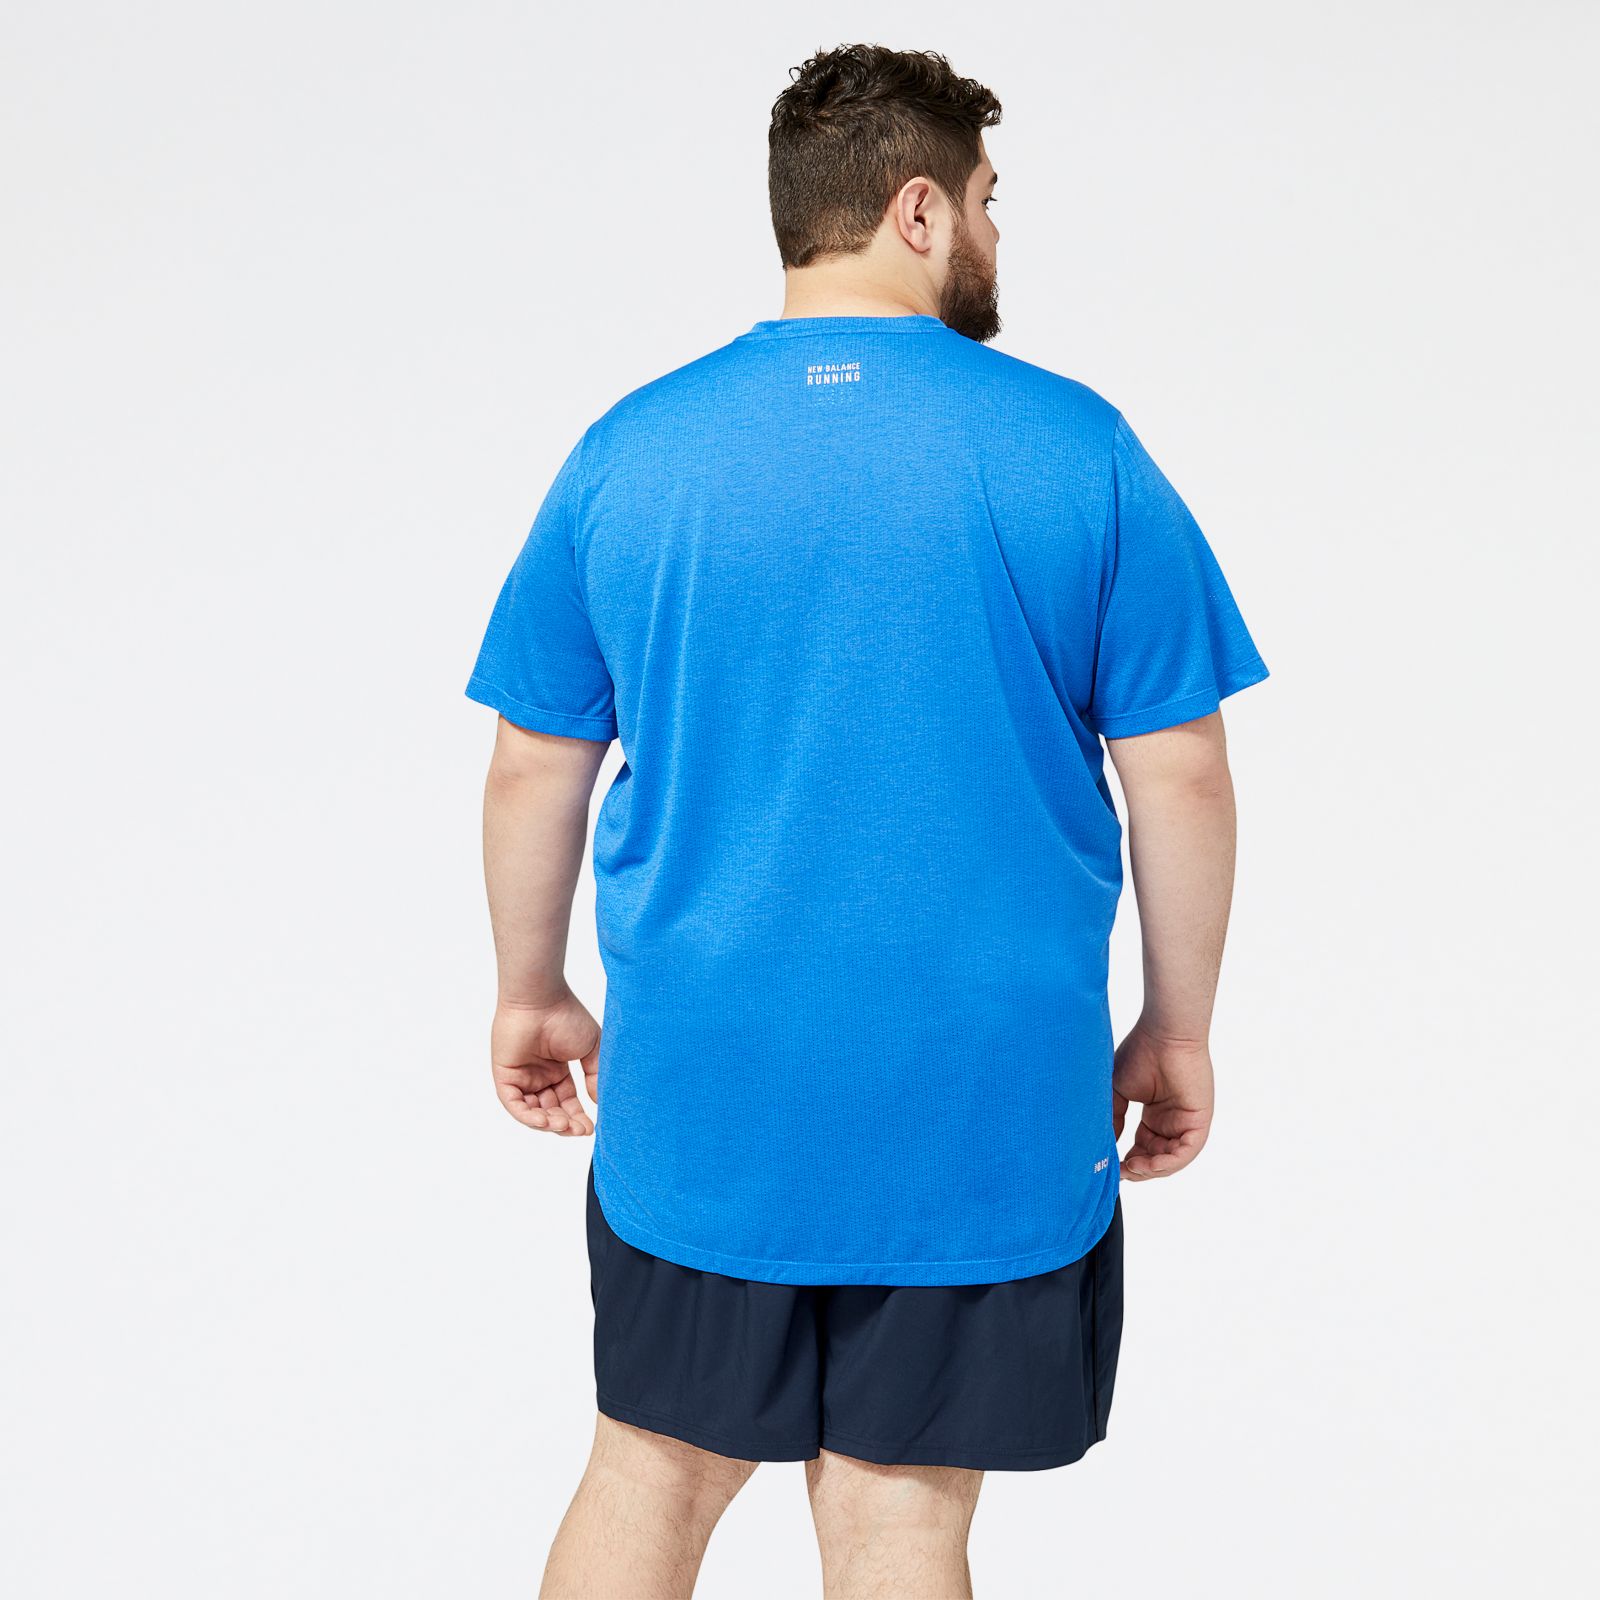 BGCC - Blue Logo Short Sleeve Unisex T-Shirt